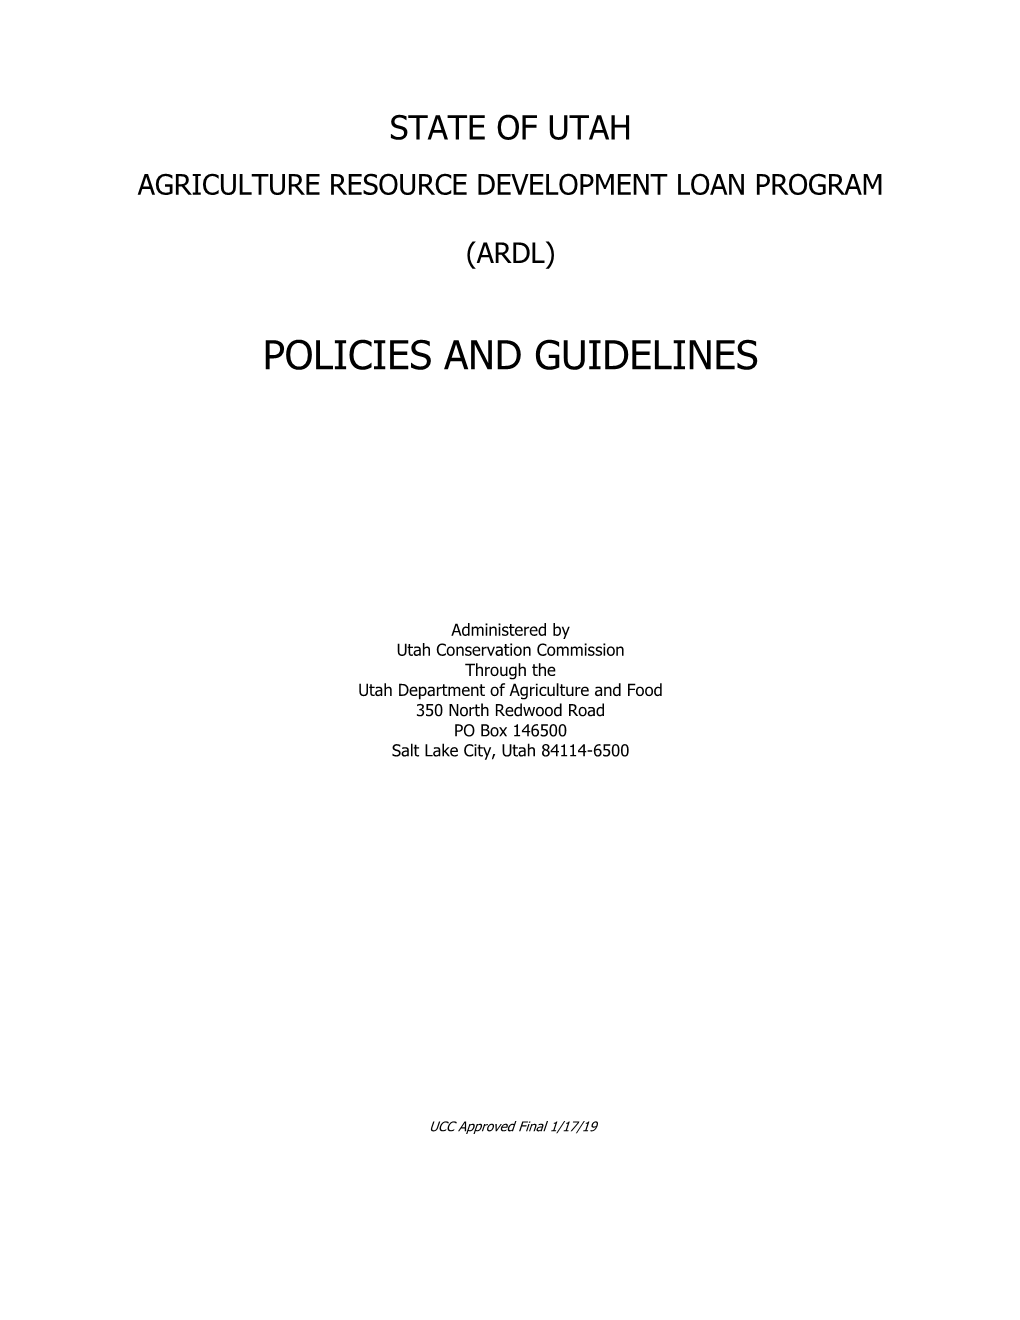 Agriculture Resource Development Loan Program (Ardl)